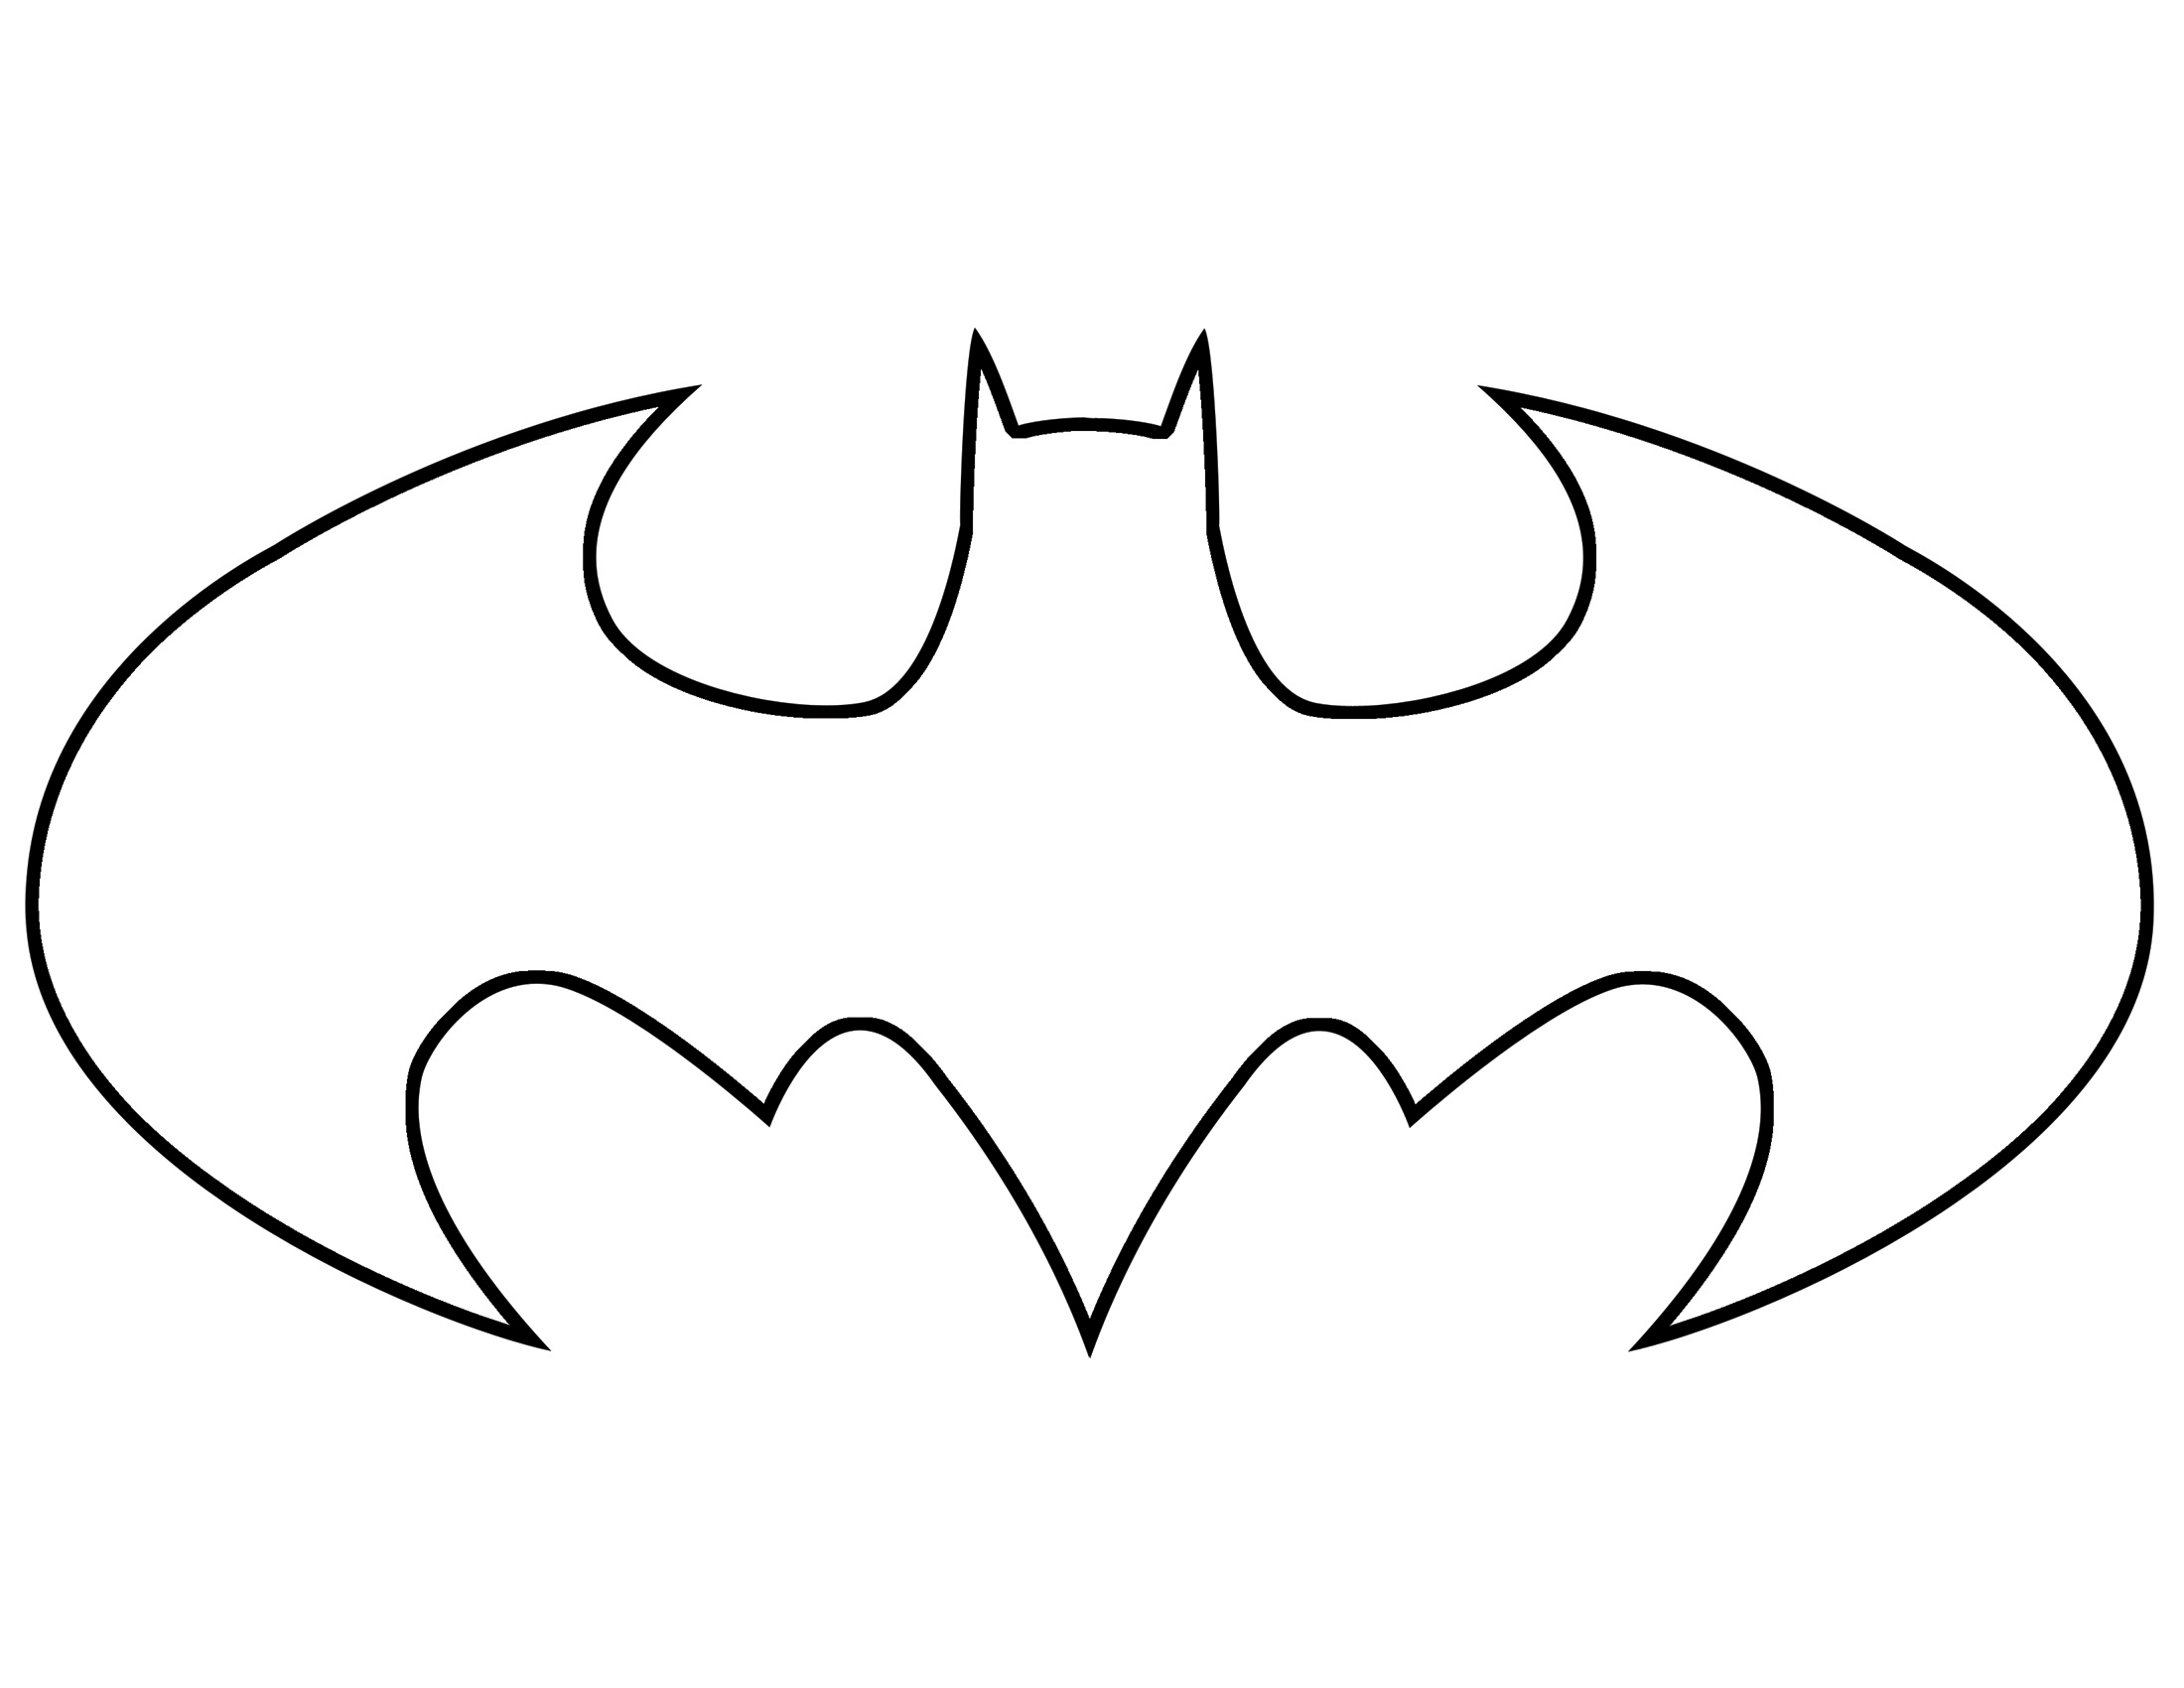 8 Best Images of Batman Pumpkin Stencils Free Printable - Batman ...